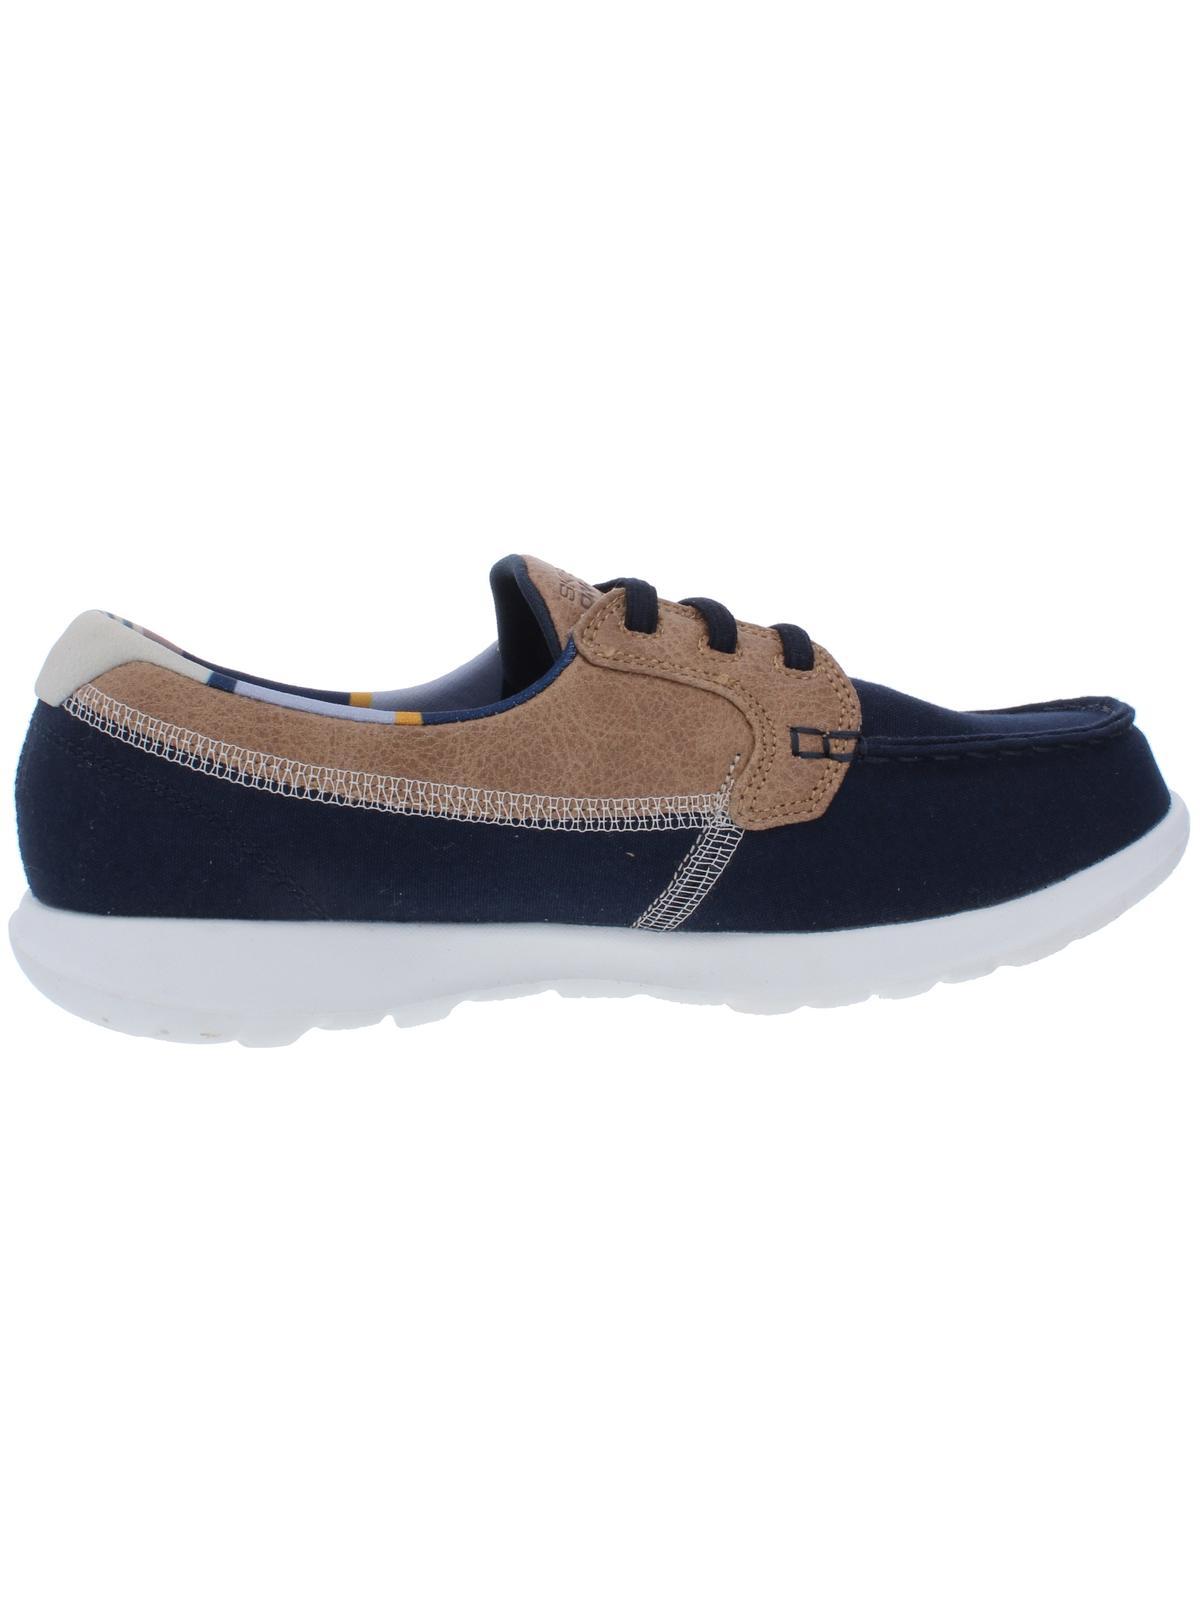 Skechers Playa Vista Canvas Lightweight Boat Shoes in Blue | Lyst